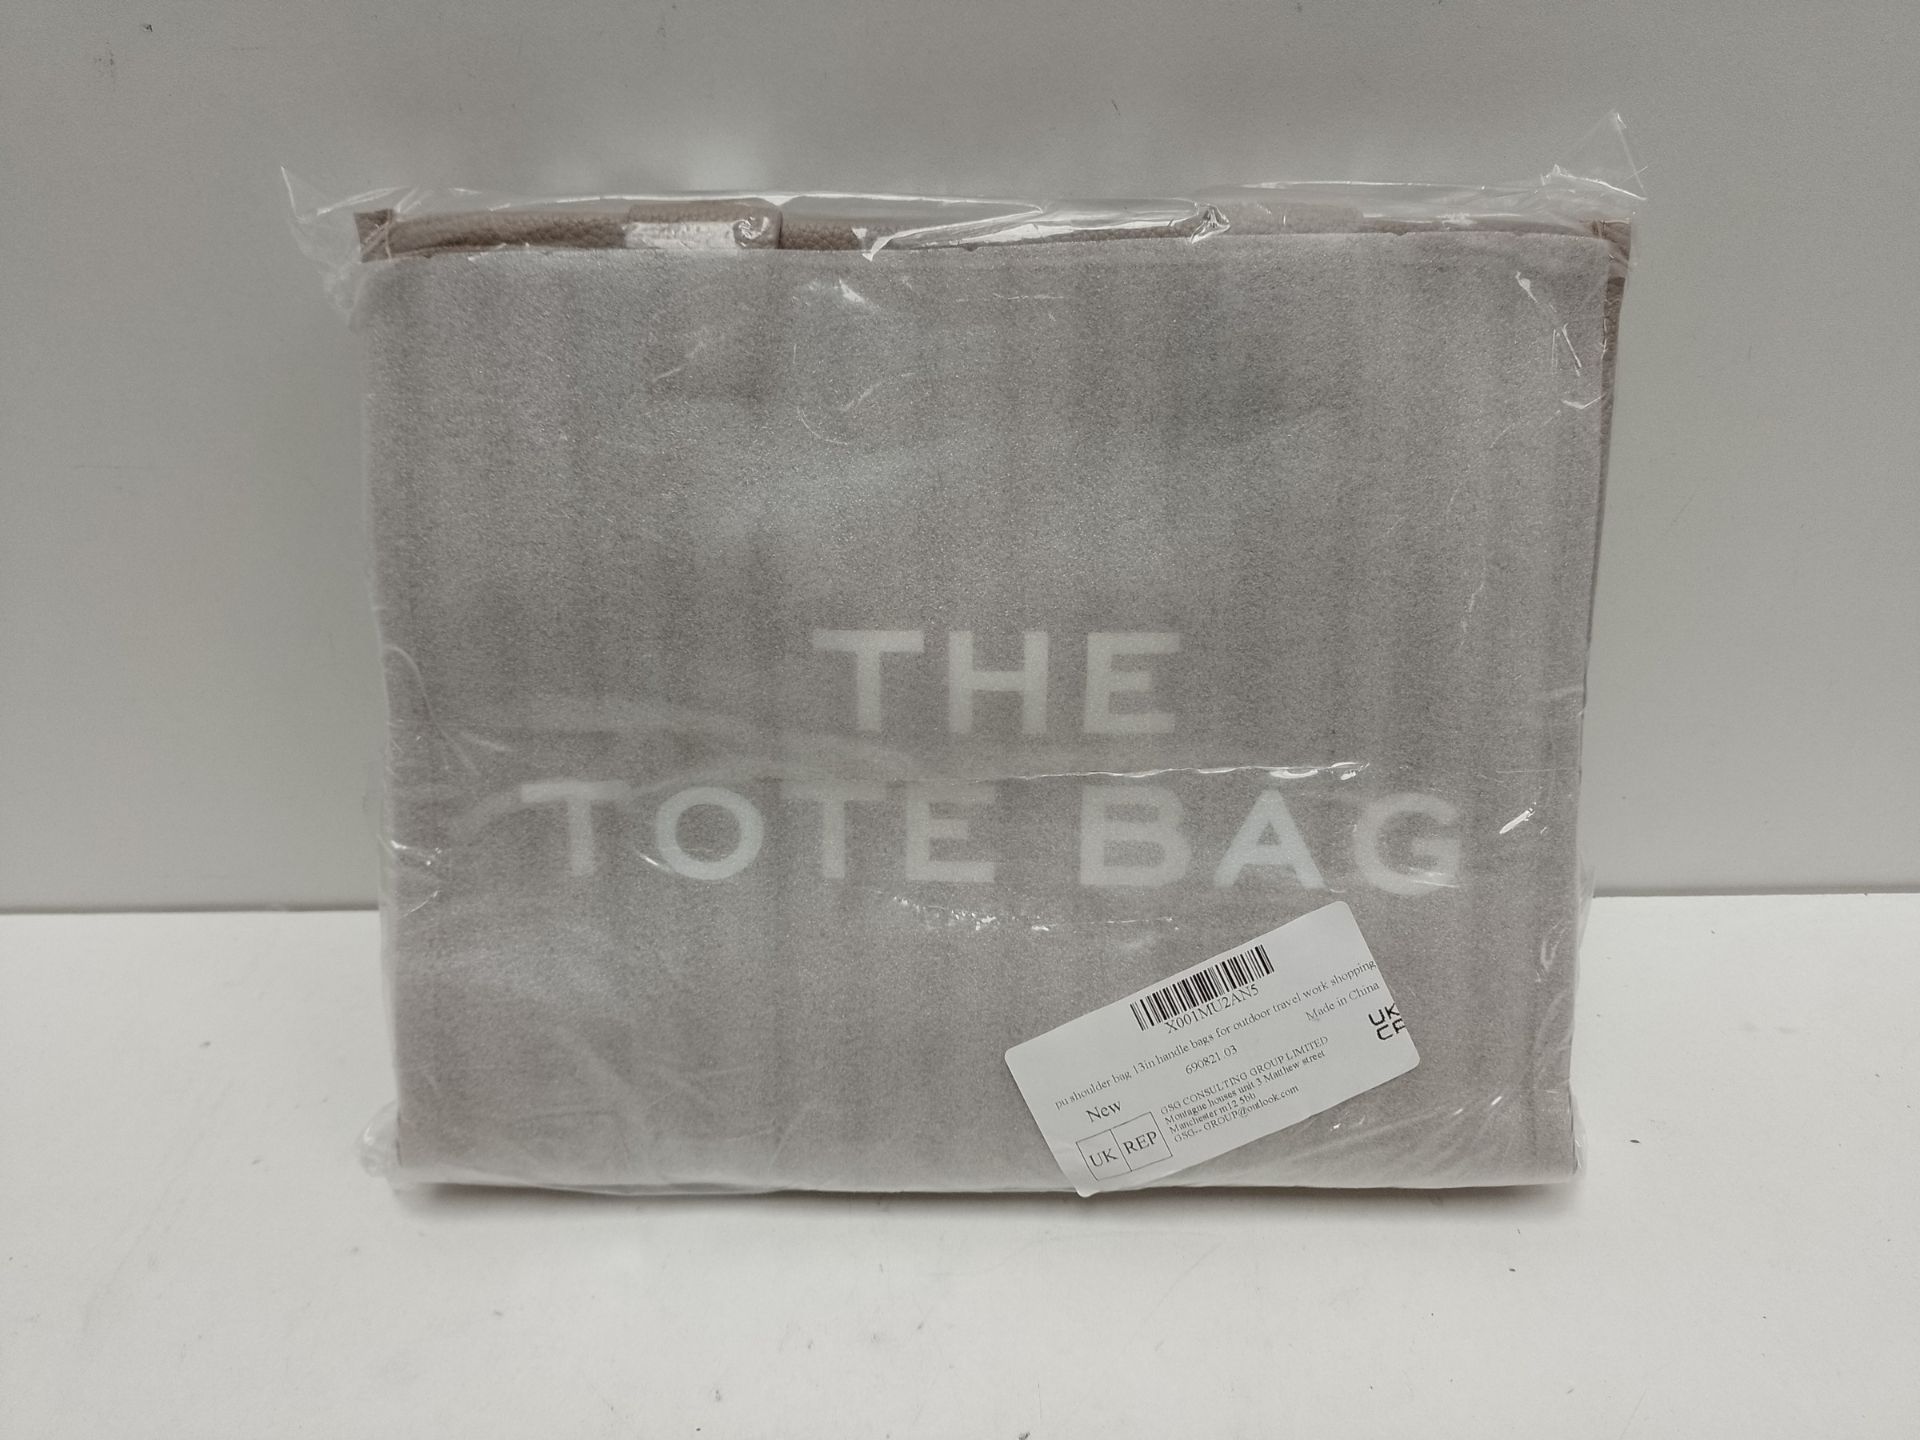 RRP £33.93 BRAND NEW STOCK DKIIL NOIYB Tote Bag for Women - Image 2 of 2